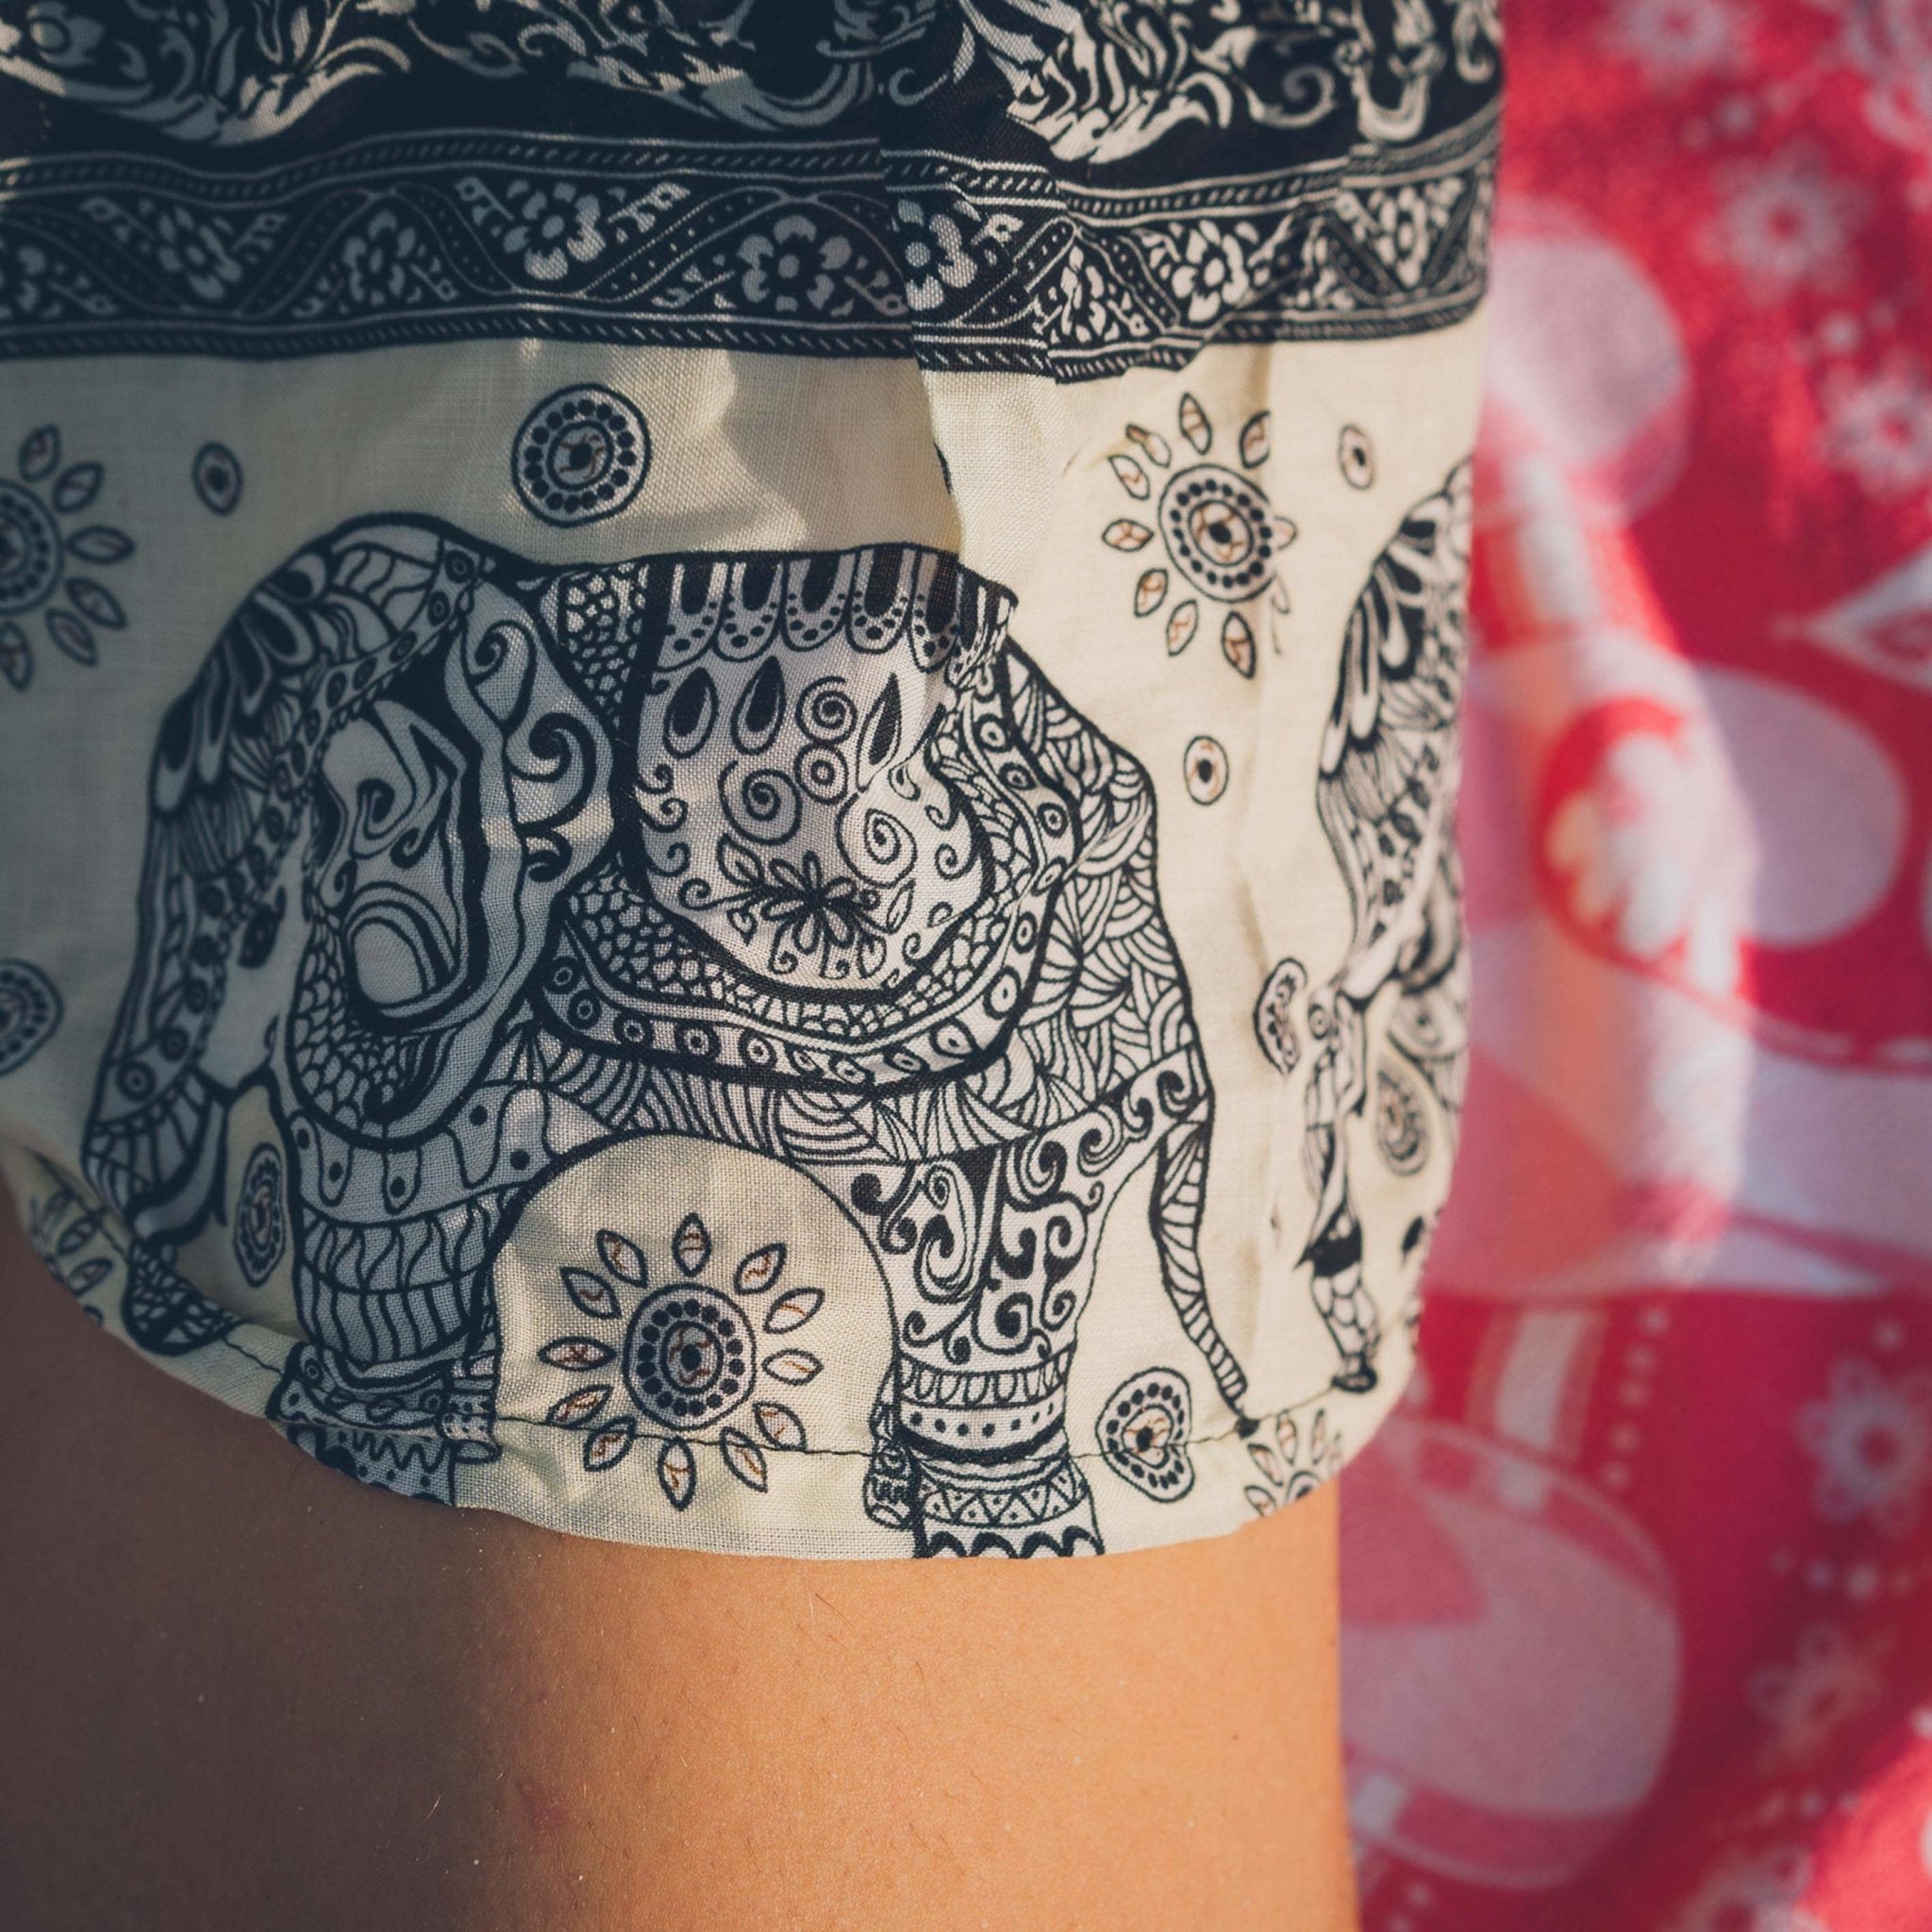 BALI SHORTS Elepanta Women's Shorts - Buy Today Elephant Pants Jewelry And Bohemian Clothes Handmade In Thailand Help To Save The Elephants FairTrade And Vegan